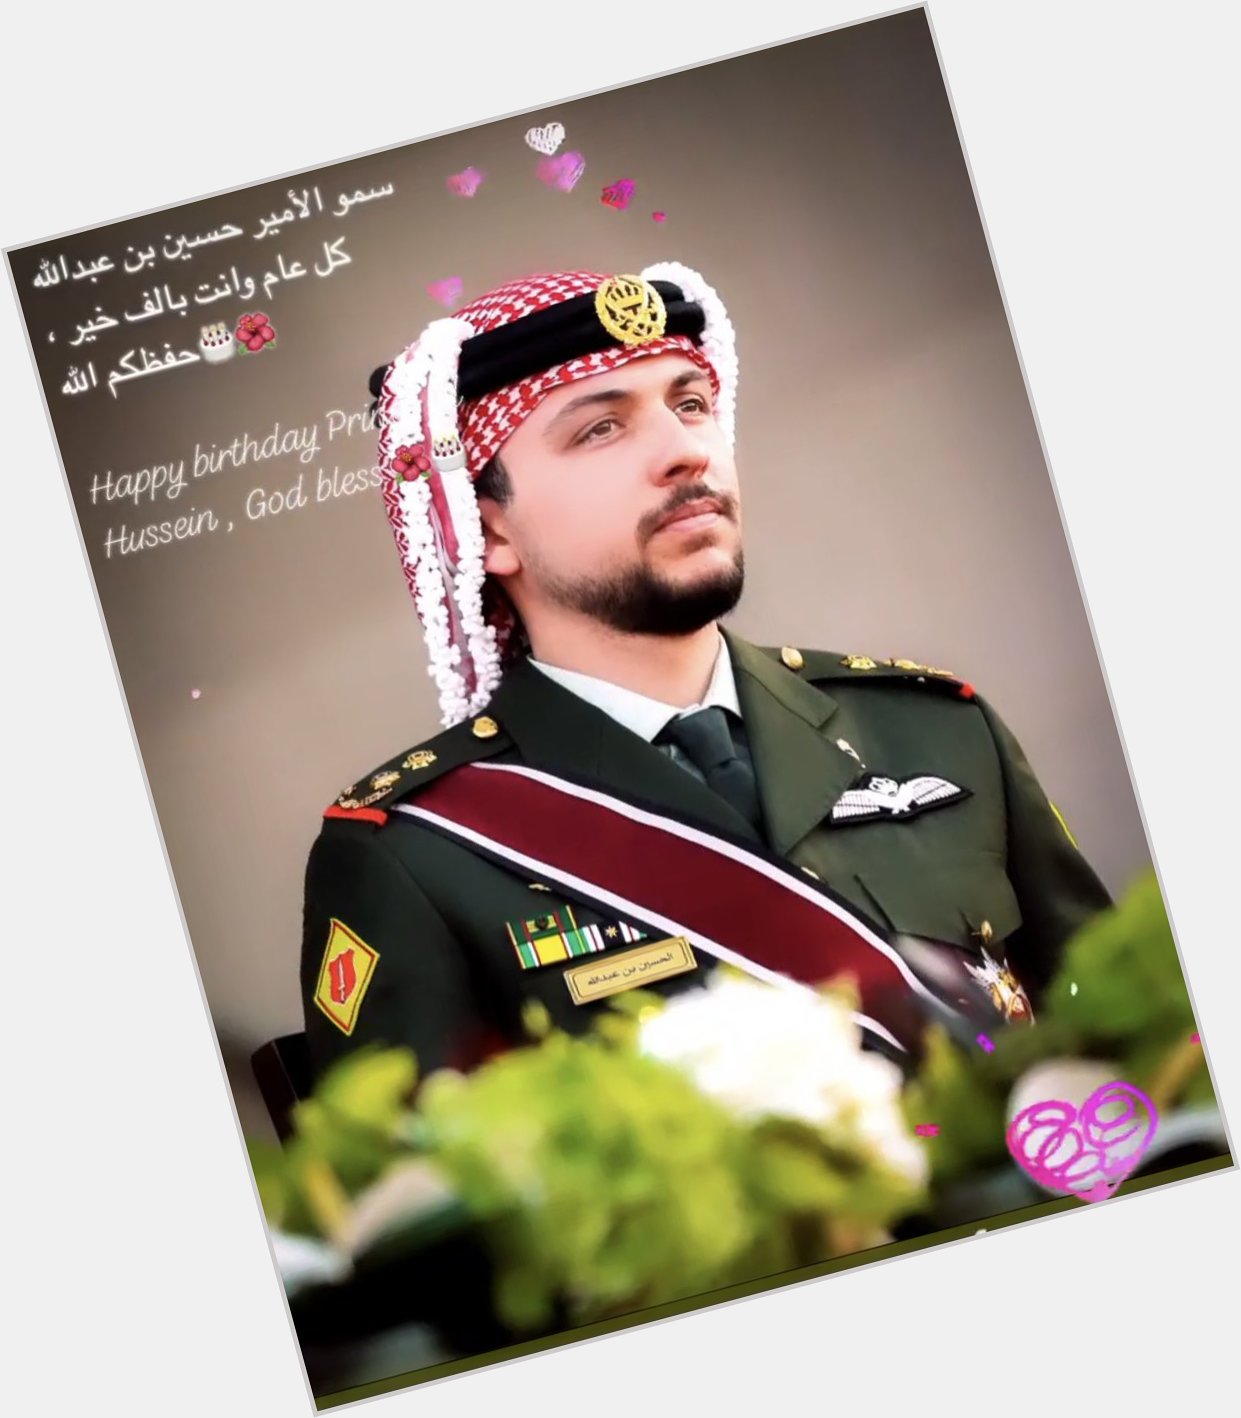                                                   Happy birthday Prince Al Hussein , God bless  